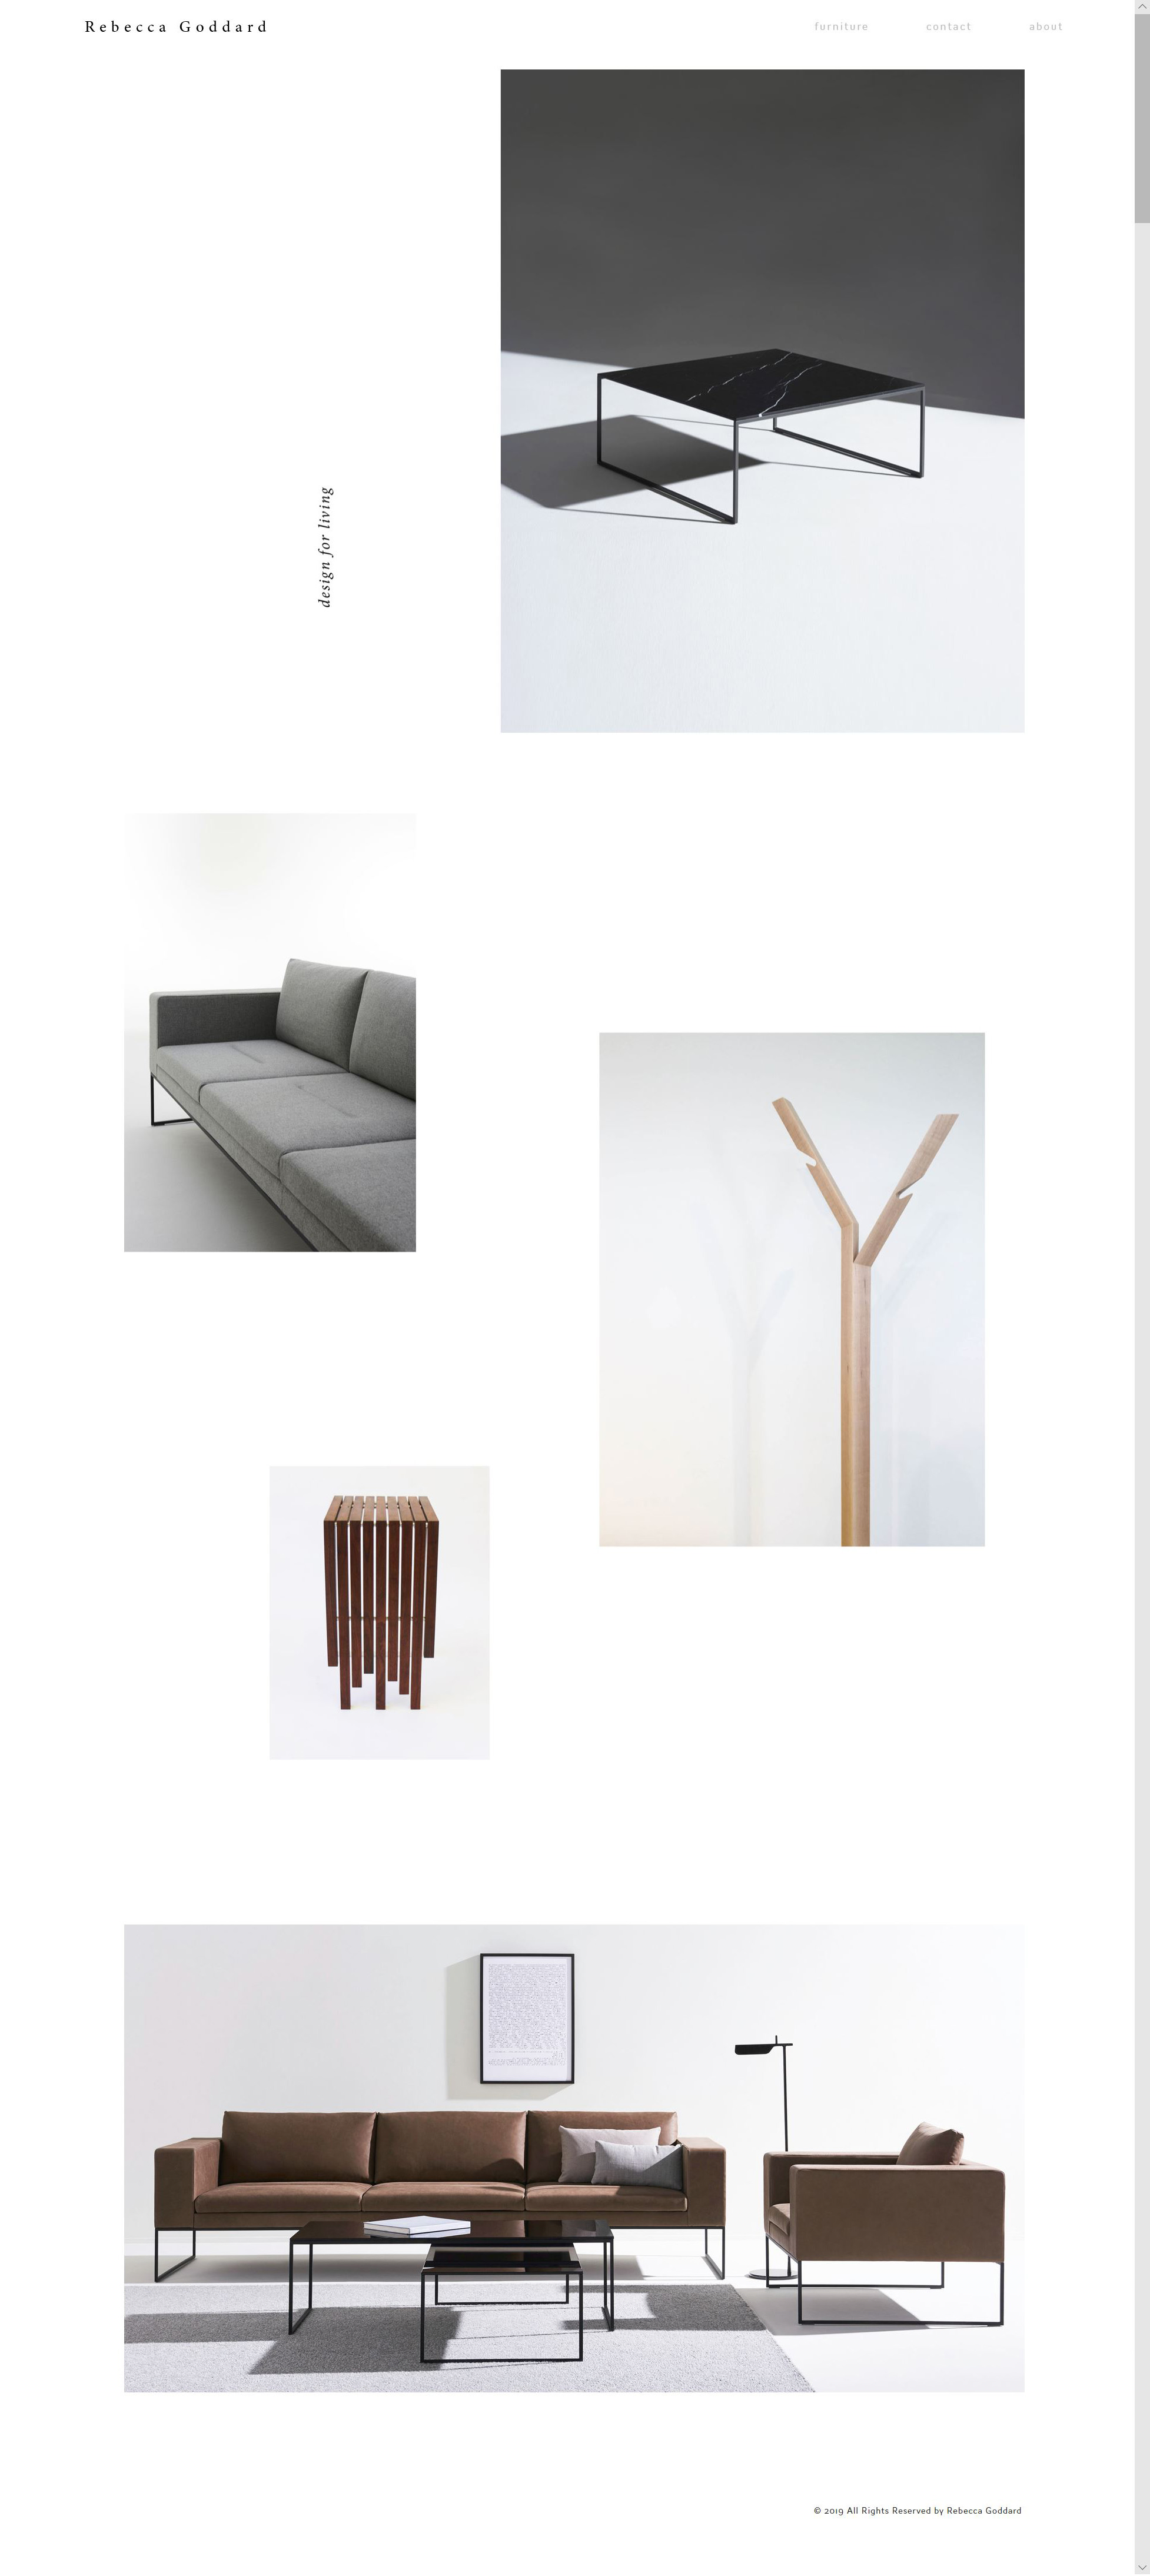 byrebeccagoddard.com / Furniture Design Website / Minimal